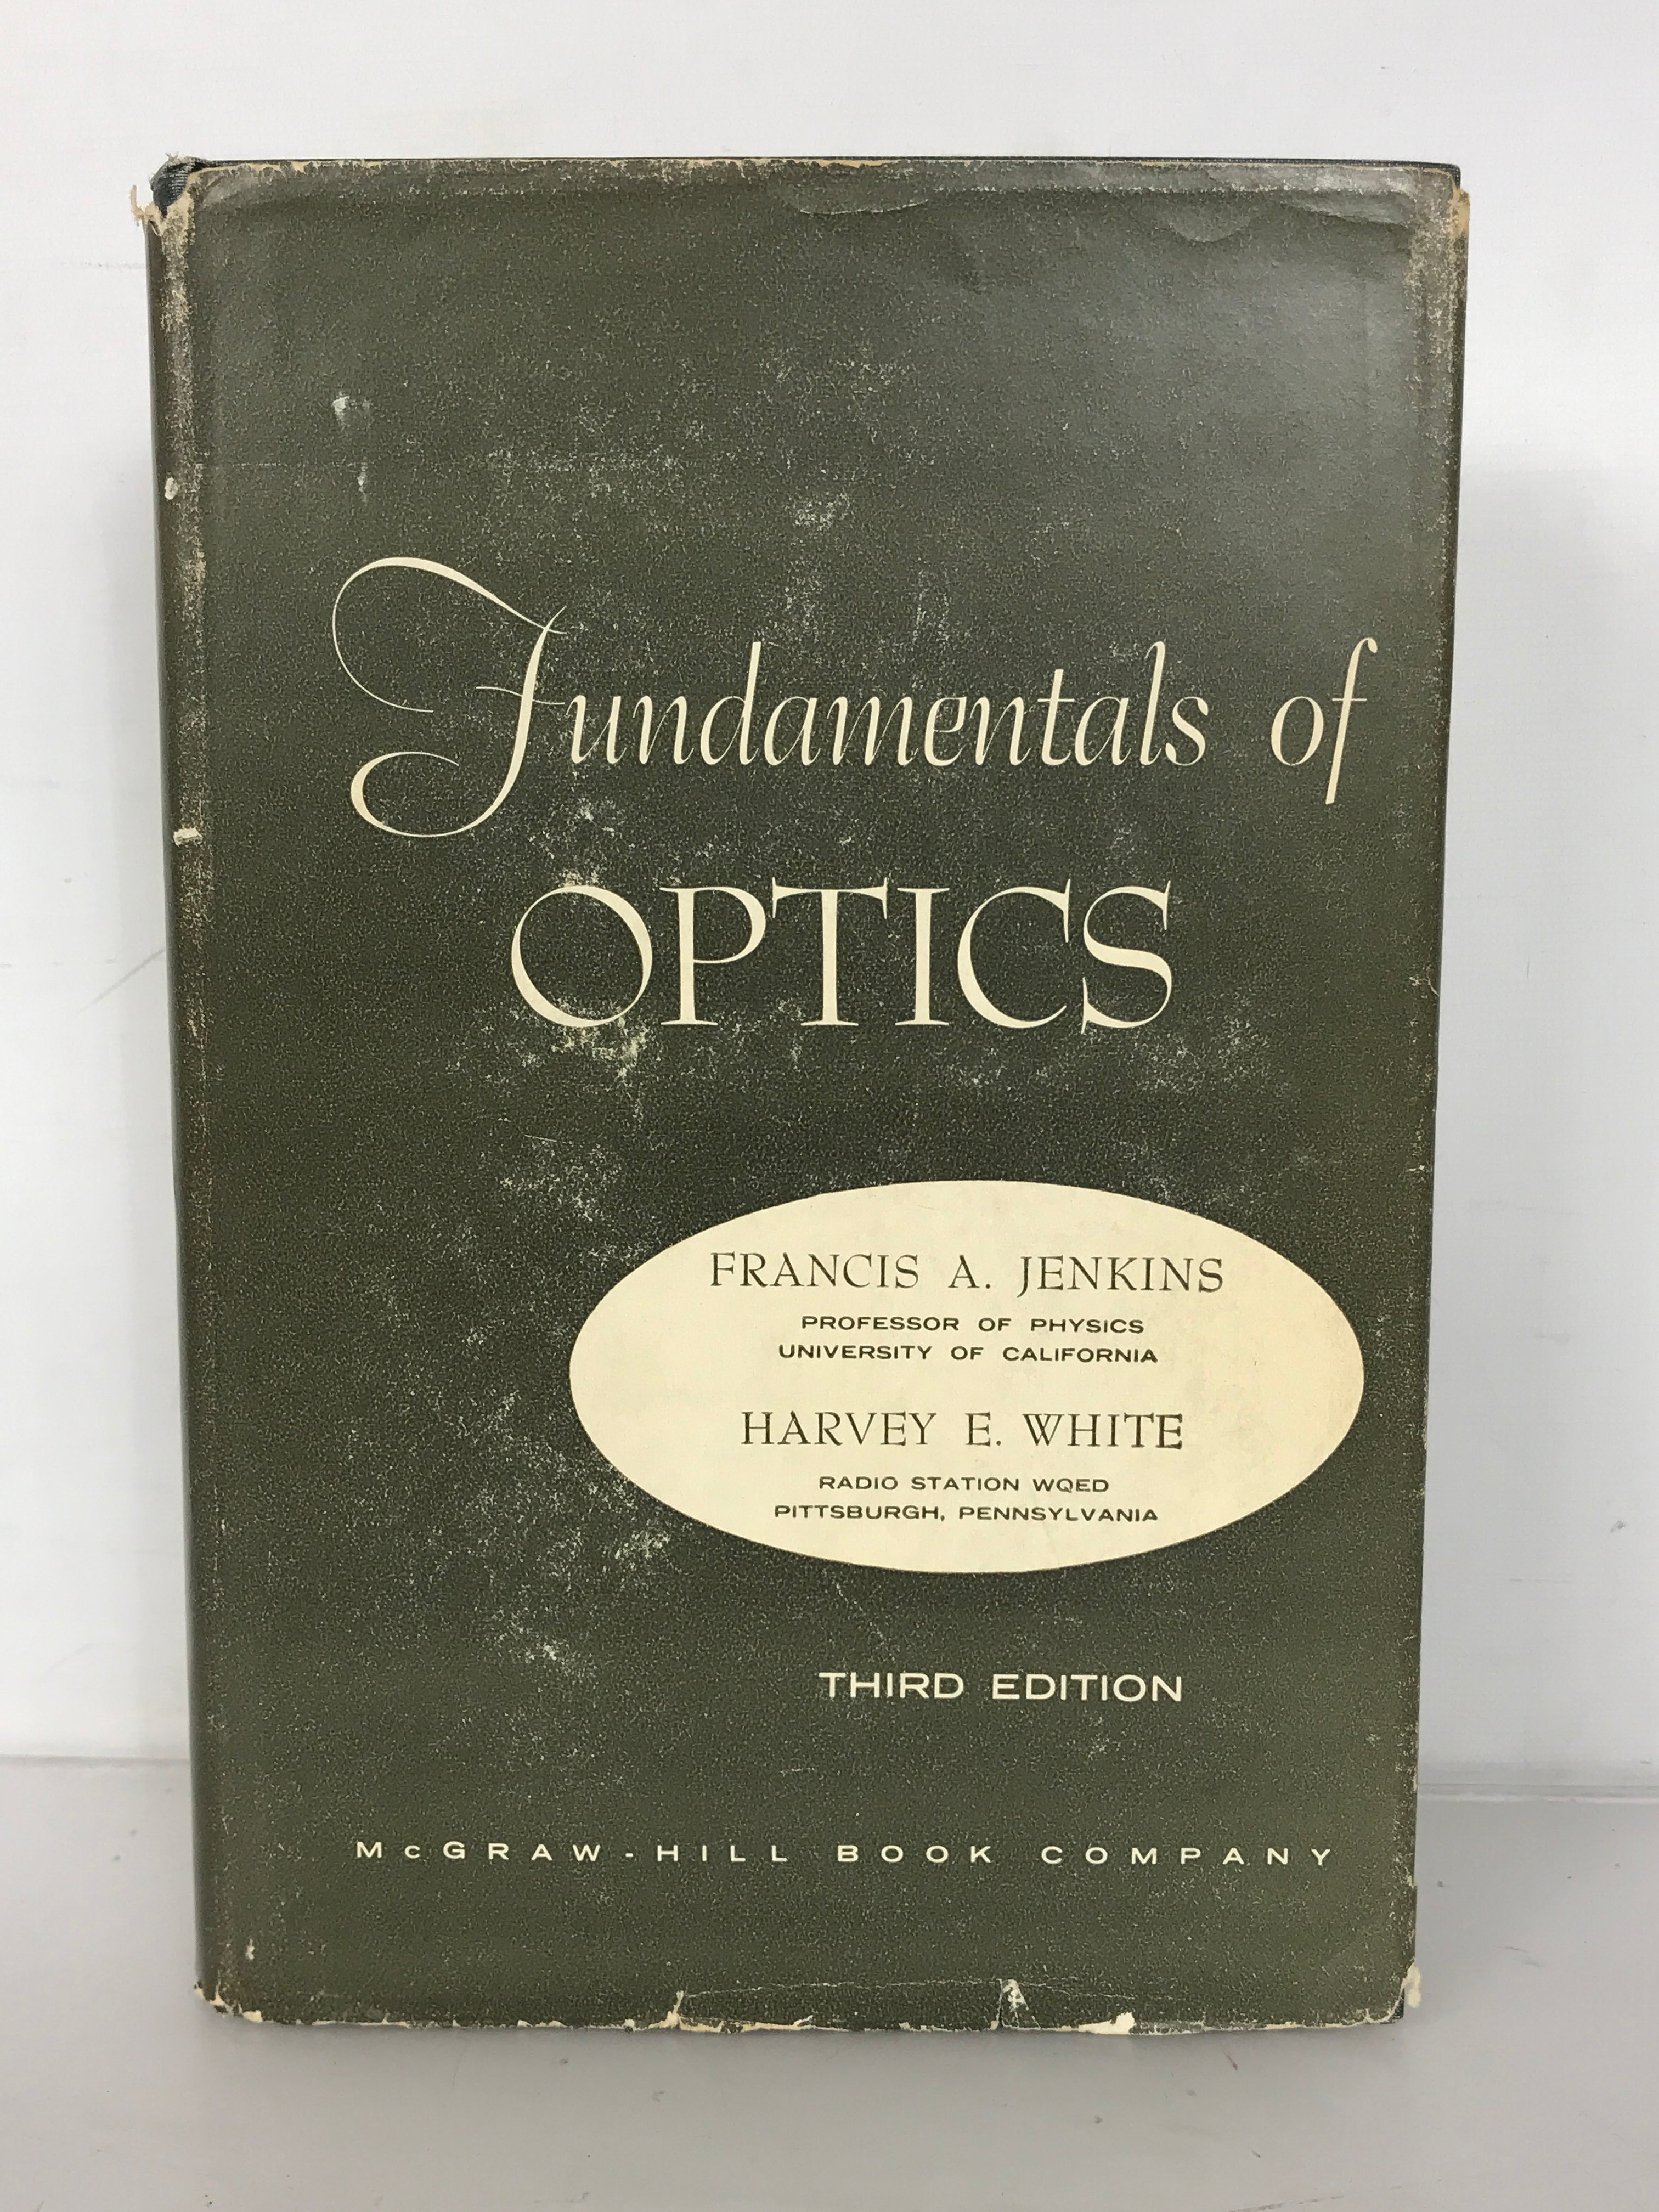 Fundamentals of Optics by Francis A. Jenkins and Harvey E. White Third Edition 1957 HC DJ